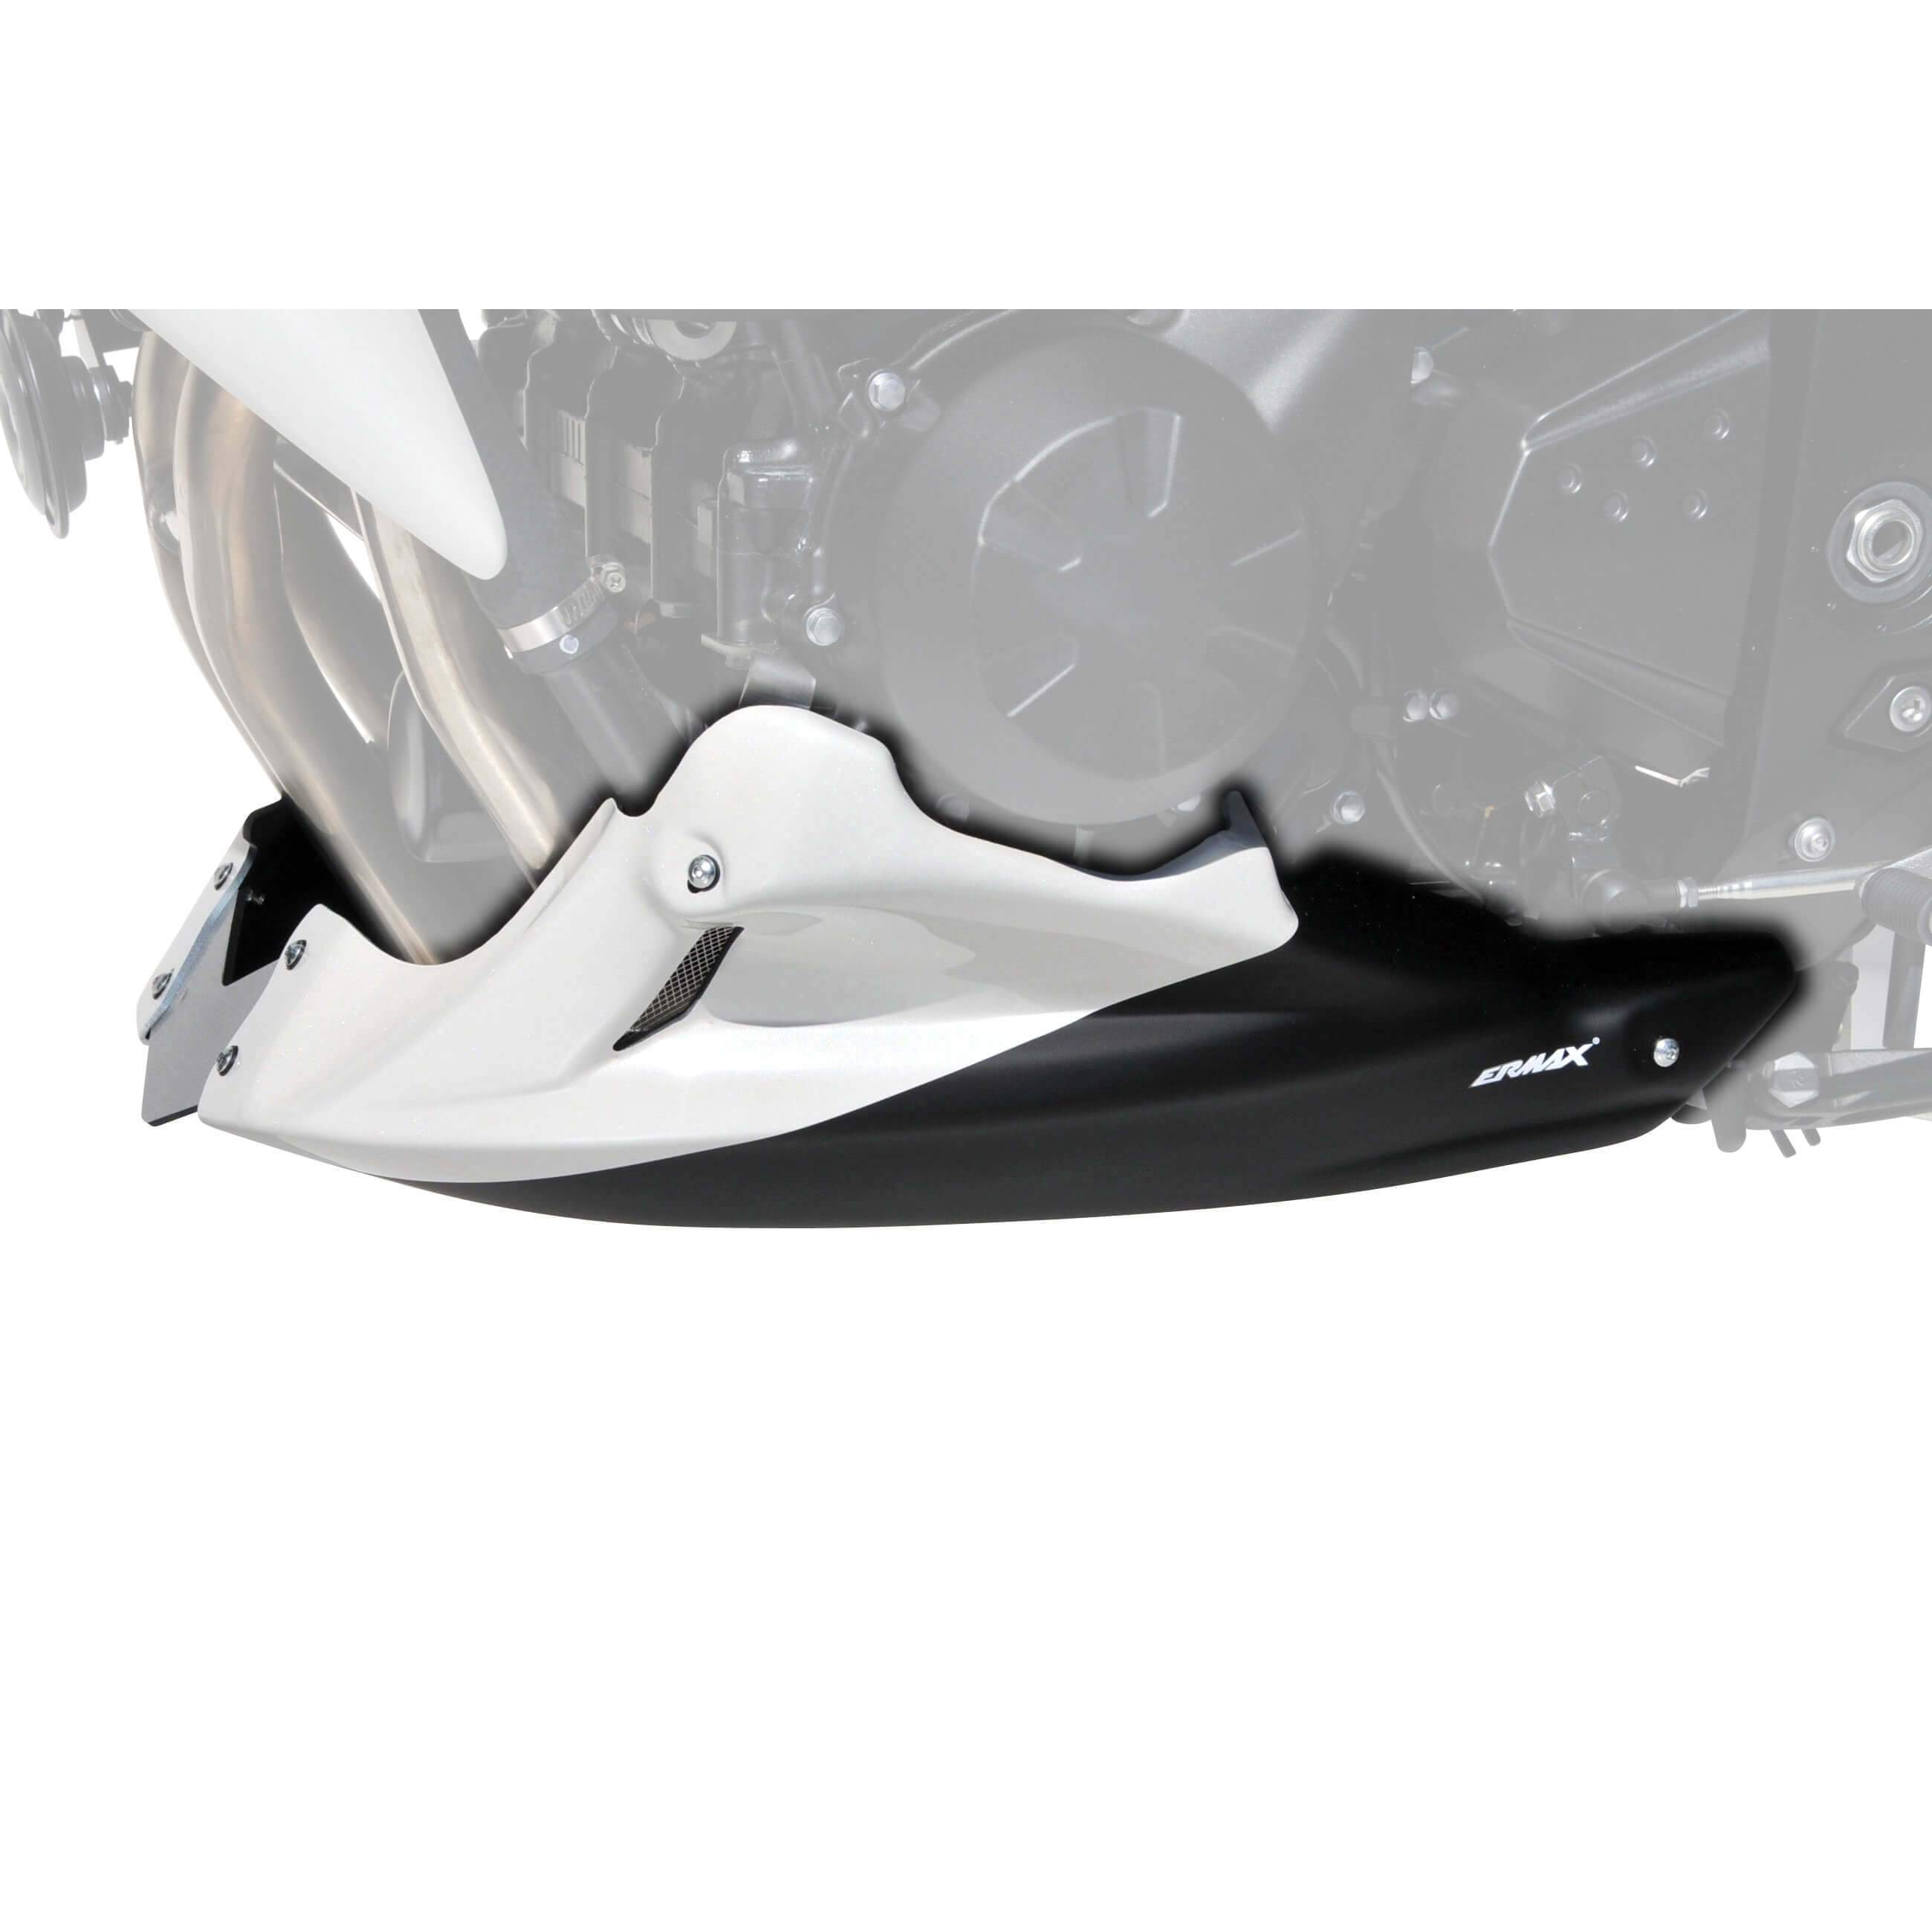 Ermax Belly Pan | Metallic White/Metallic Black (Pearl Stardust White/Spark Black) | Kawasaki Z 750 2010>2010-E890345060-Belly Pans-Pyramid Motorcycle Accessories